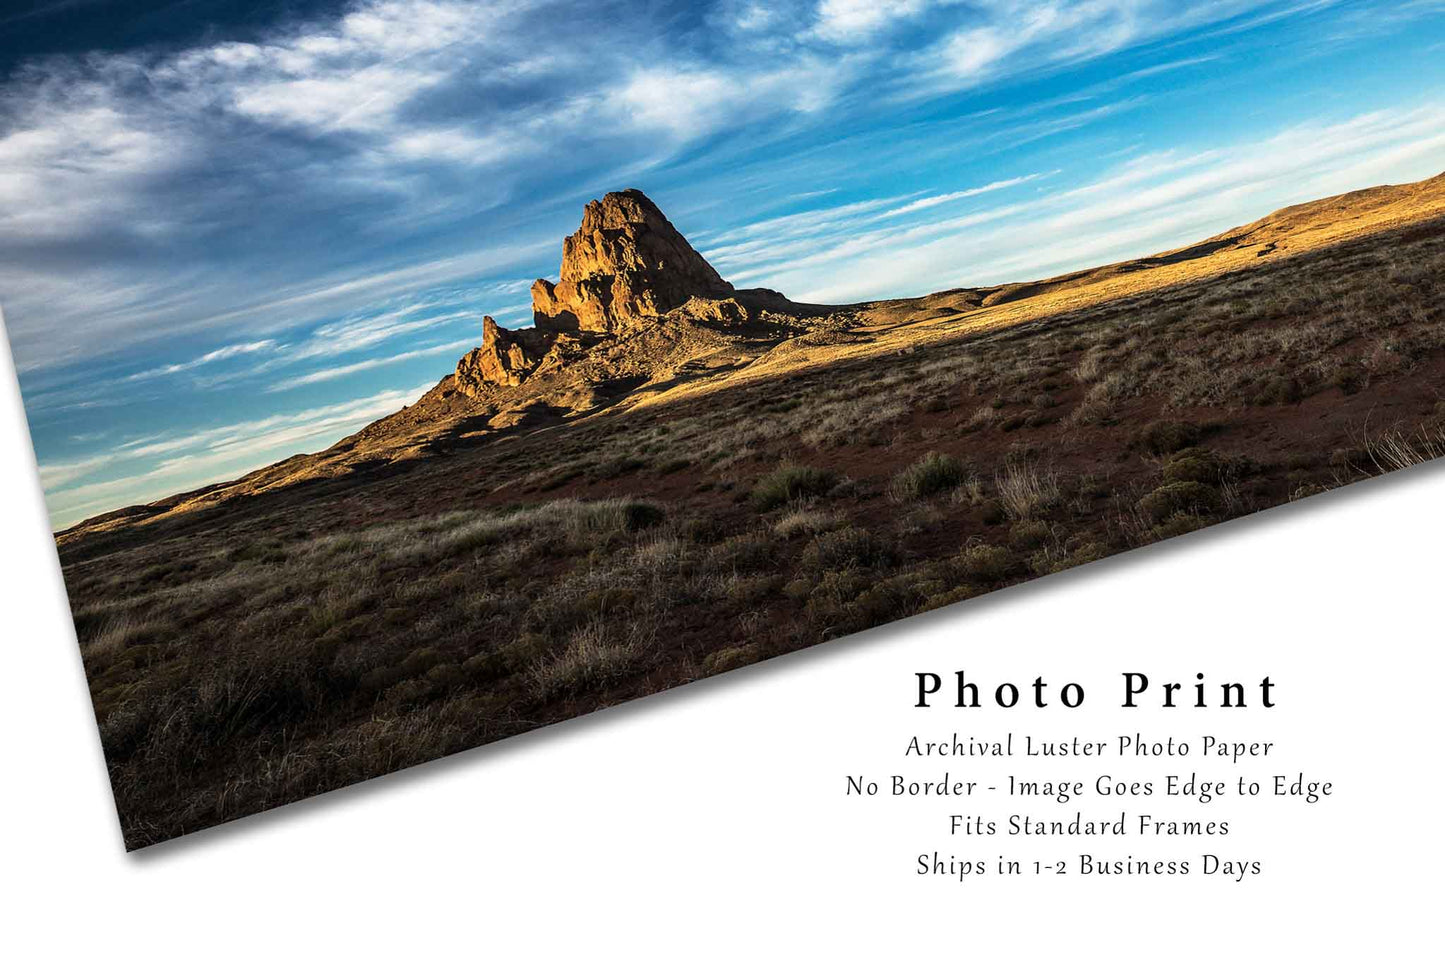 Southwest Photography Print - Picture of Agathla Peak near Monument Valley Arizona - Western Landscape Home Decor Wall Art Photo Artwork